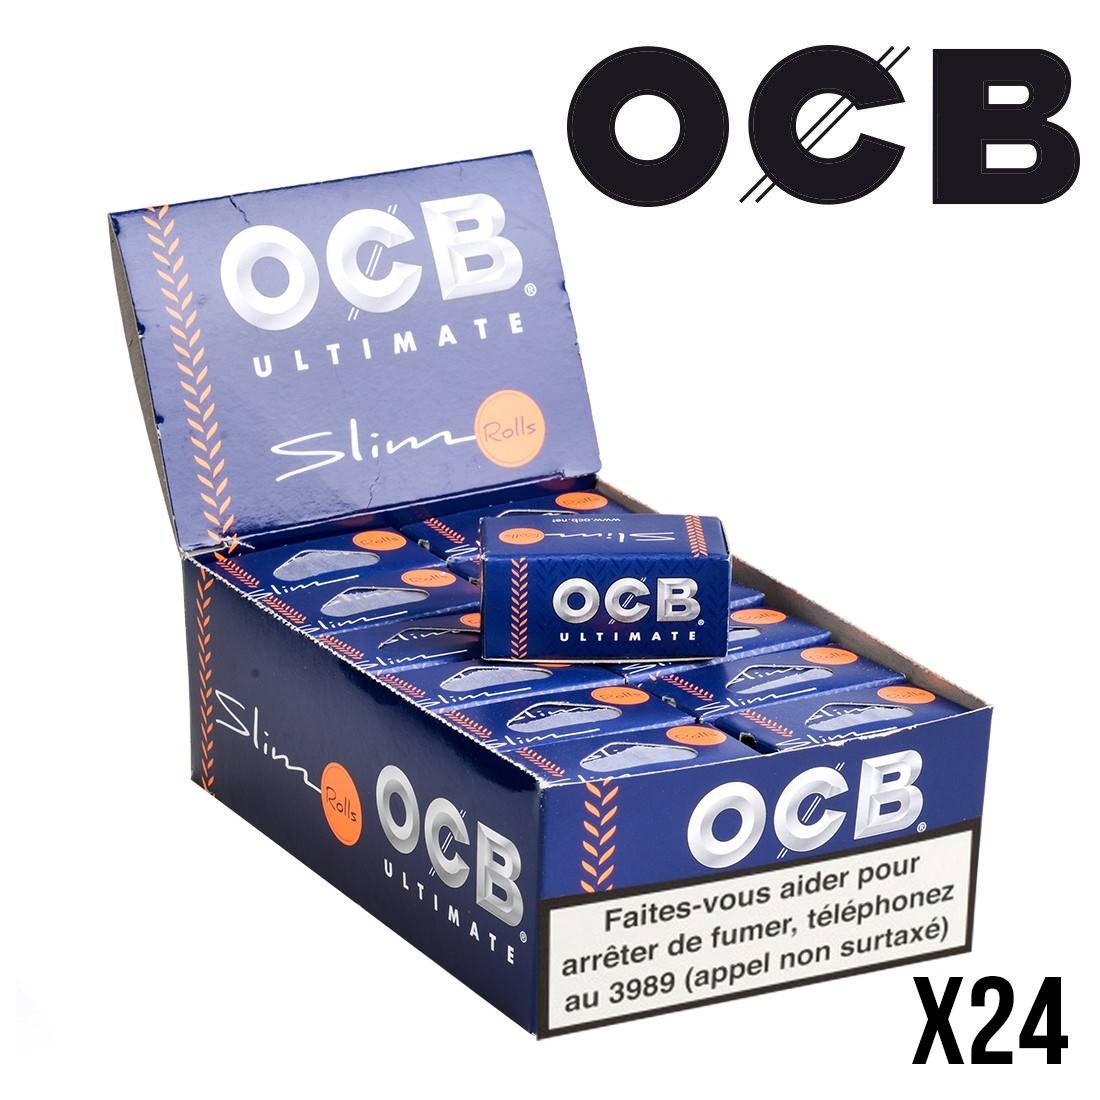 OCB Rolls Ultimate